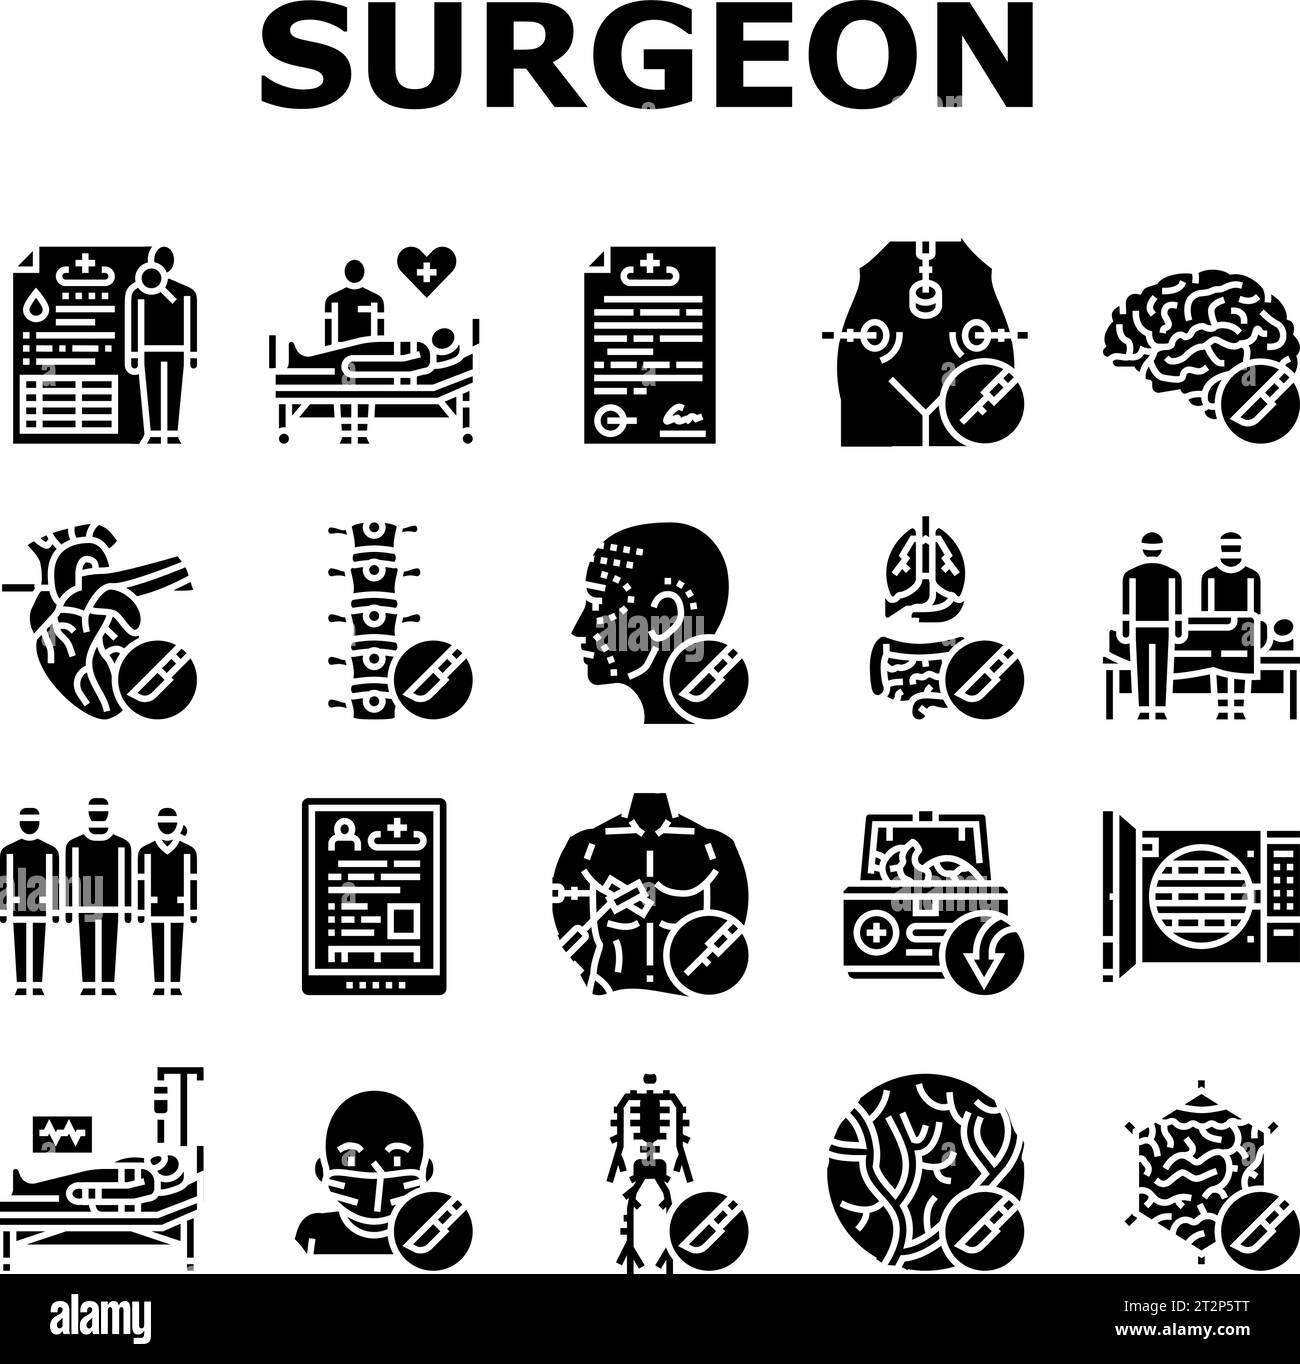 surgeon doctor hospital icons set vector Stock Vector